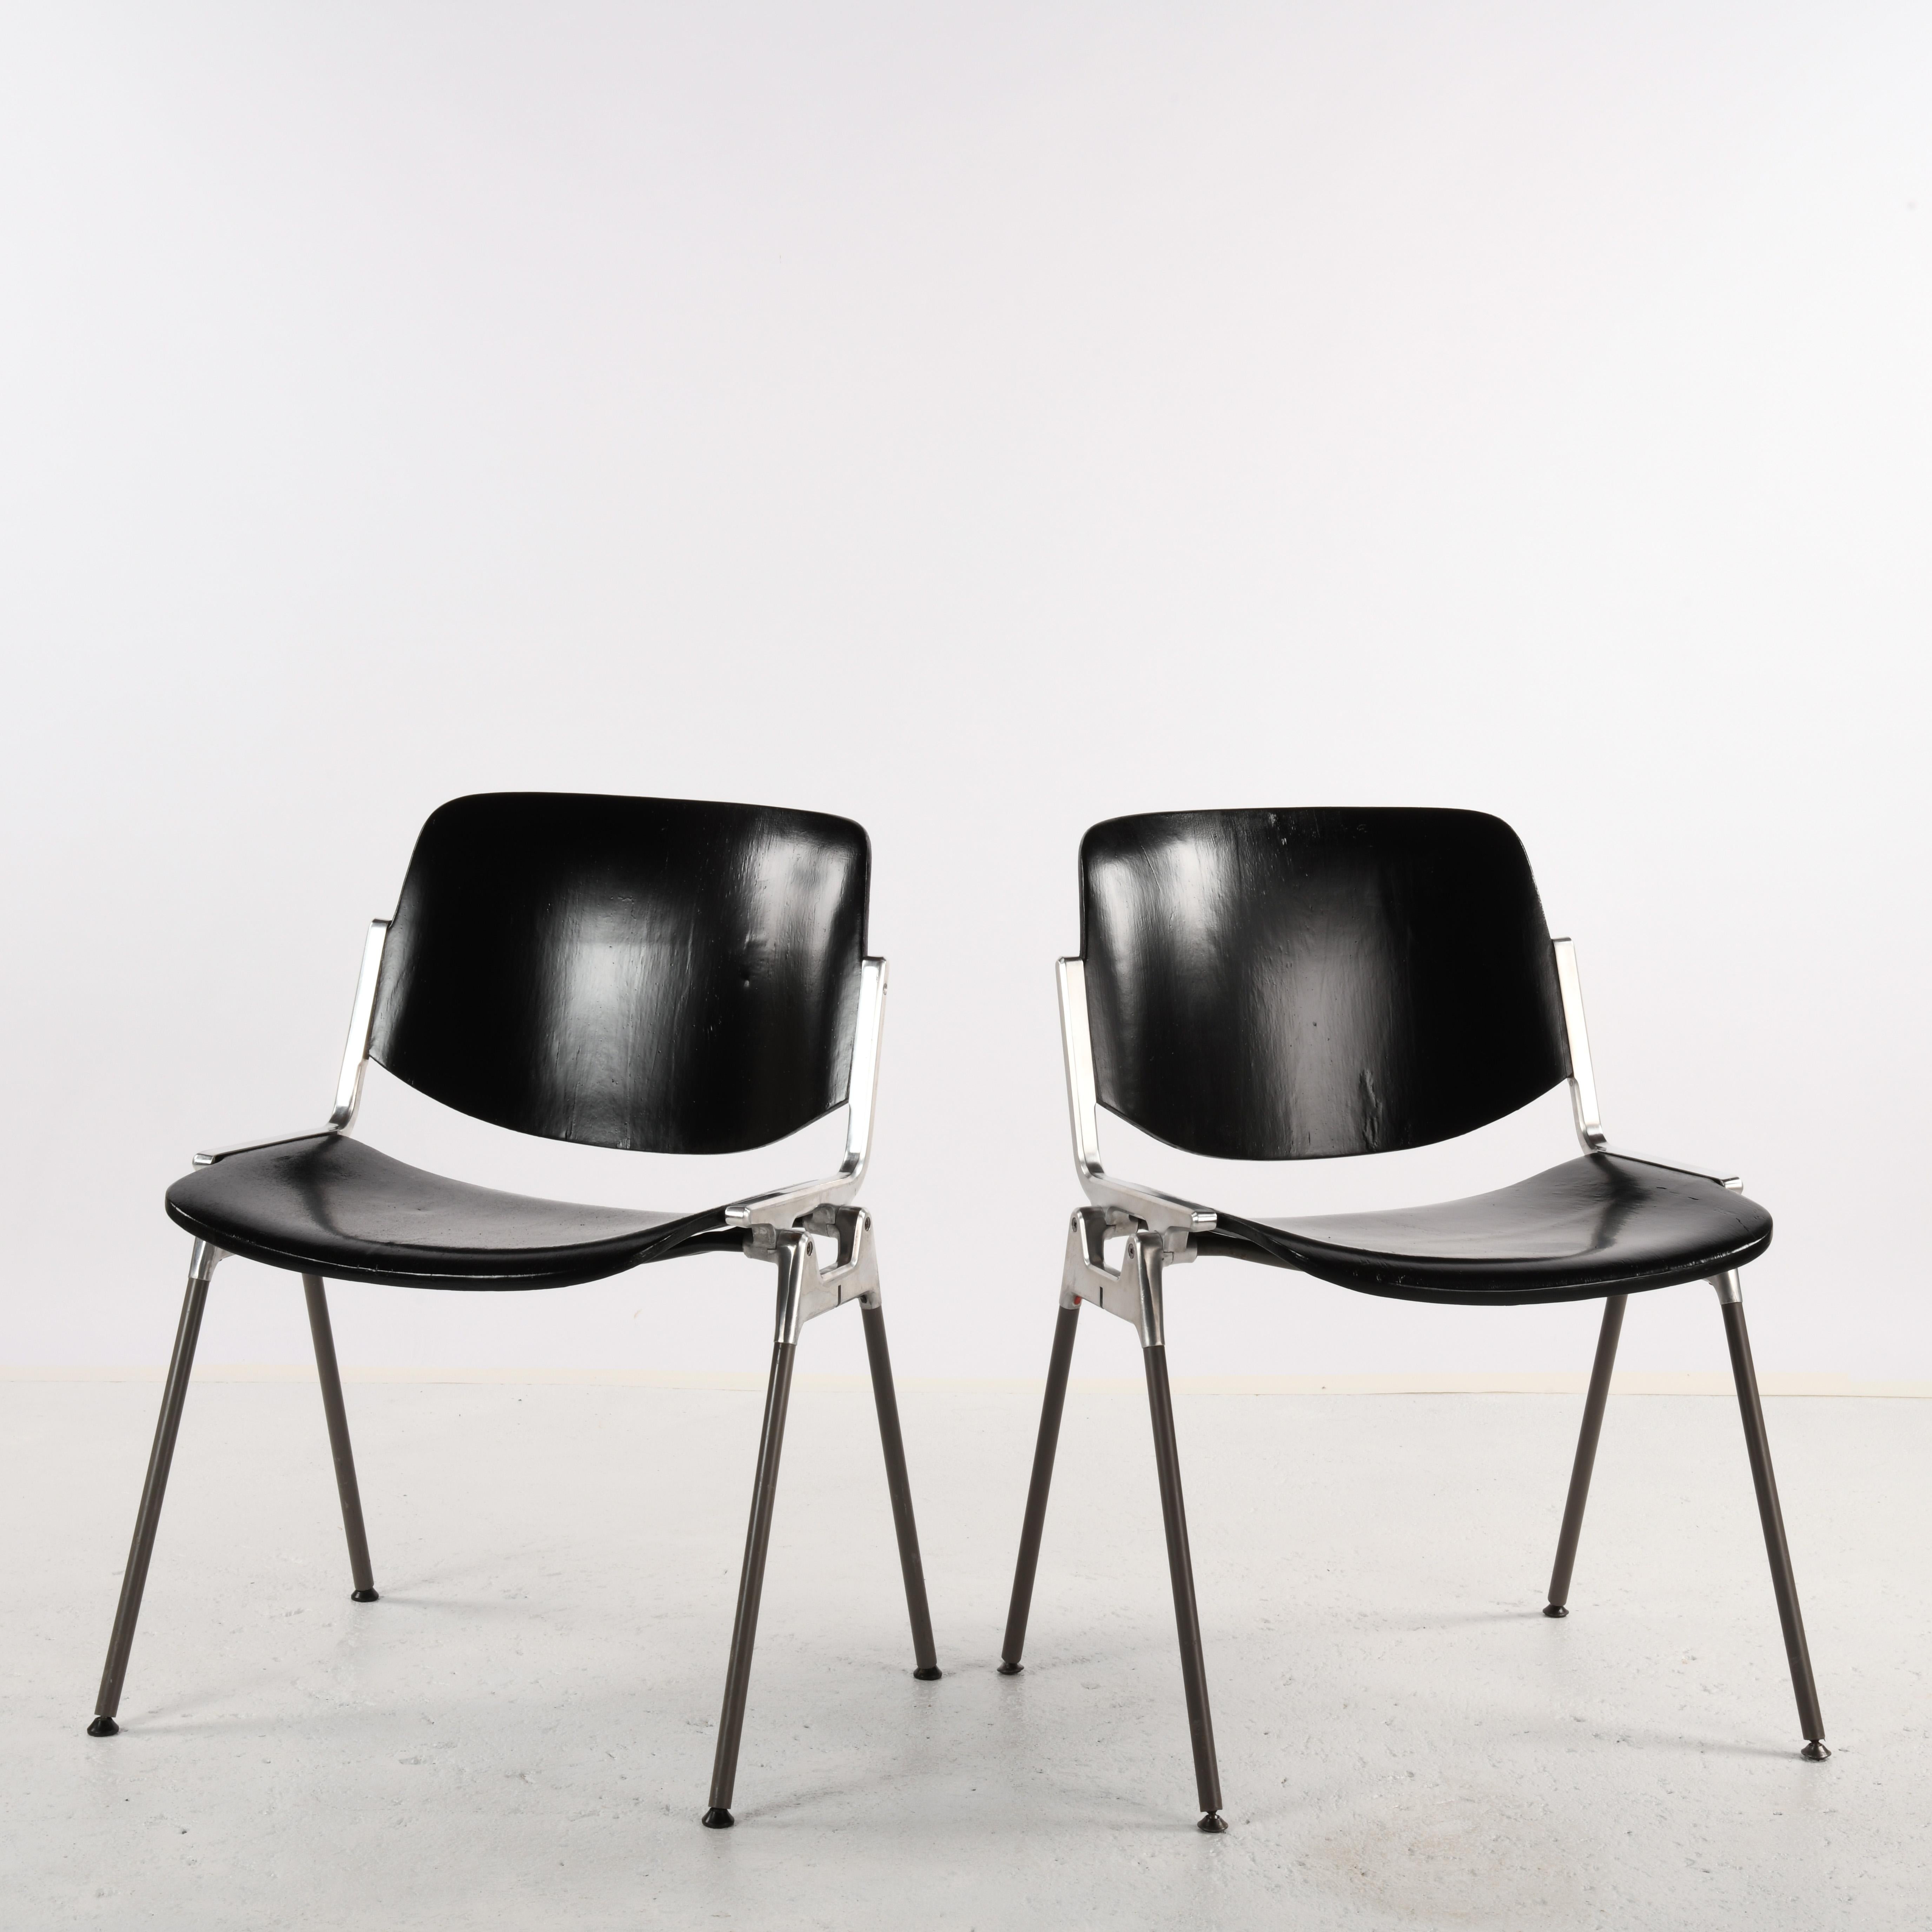 Pareja de sillas modelo DSC 106 diseñadas por Giancarlo Piretti en 1965 publicadas por Castelli. Armazón de aluminio fundido, patas metálicas tapizadas en plástico, asiento y respaldo de madera pintada. El asiento y el respaldo estaban tapizados